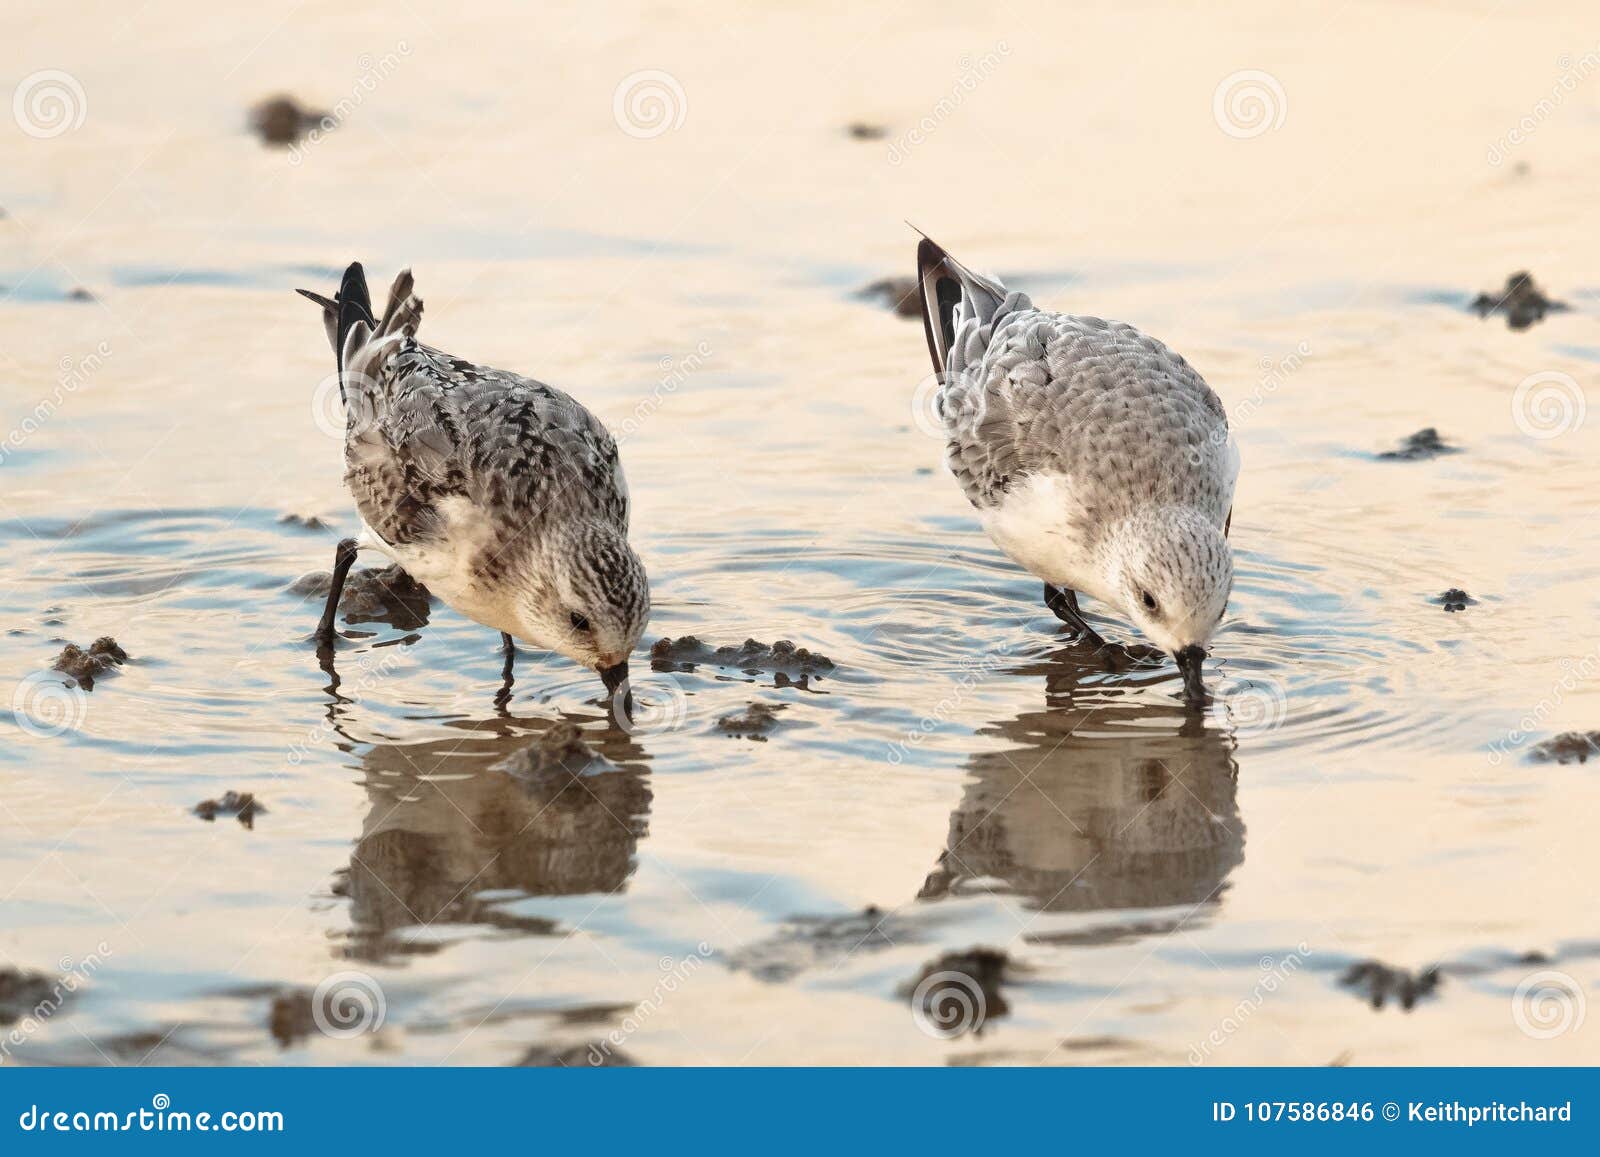 sanderling waders or shorebirds, calidris alba. uk.